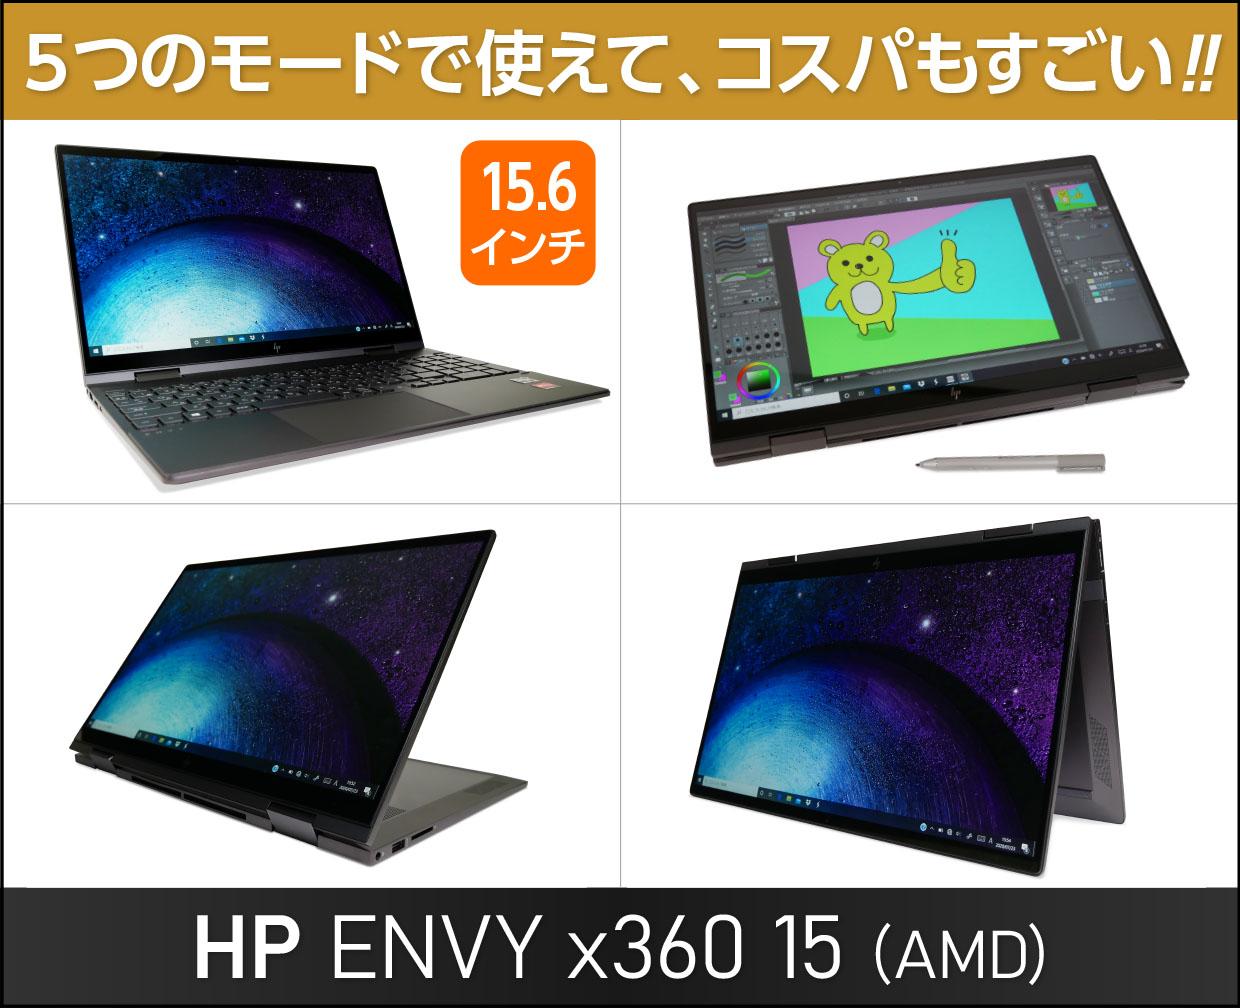 HP ENVY x360 15（AMD）のメイン画像